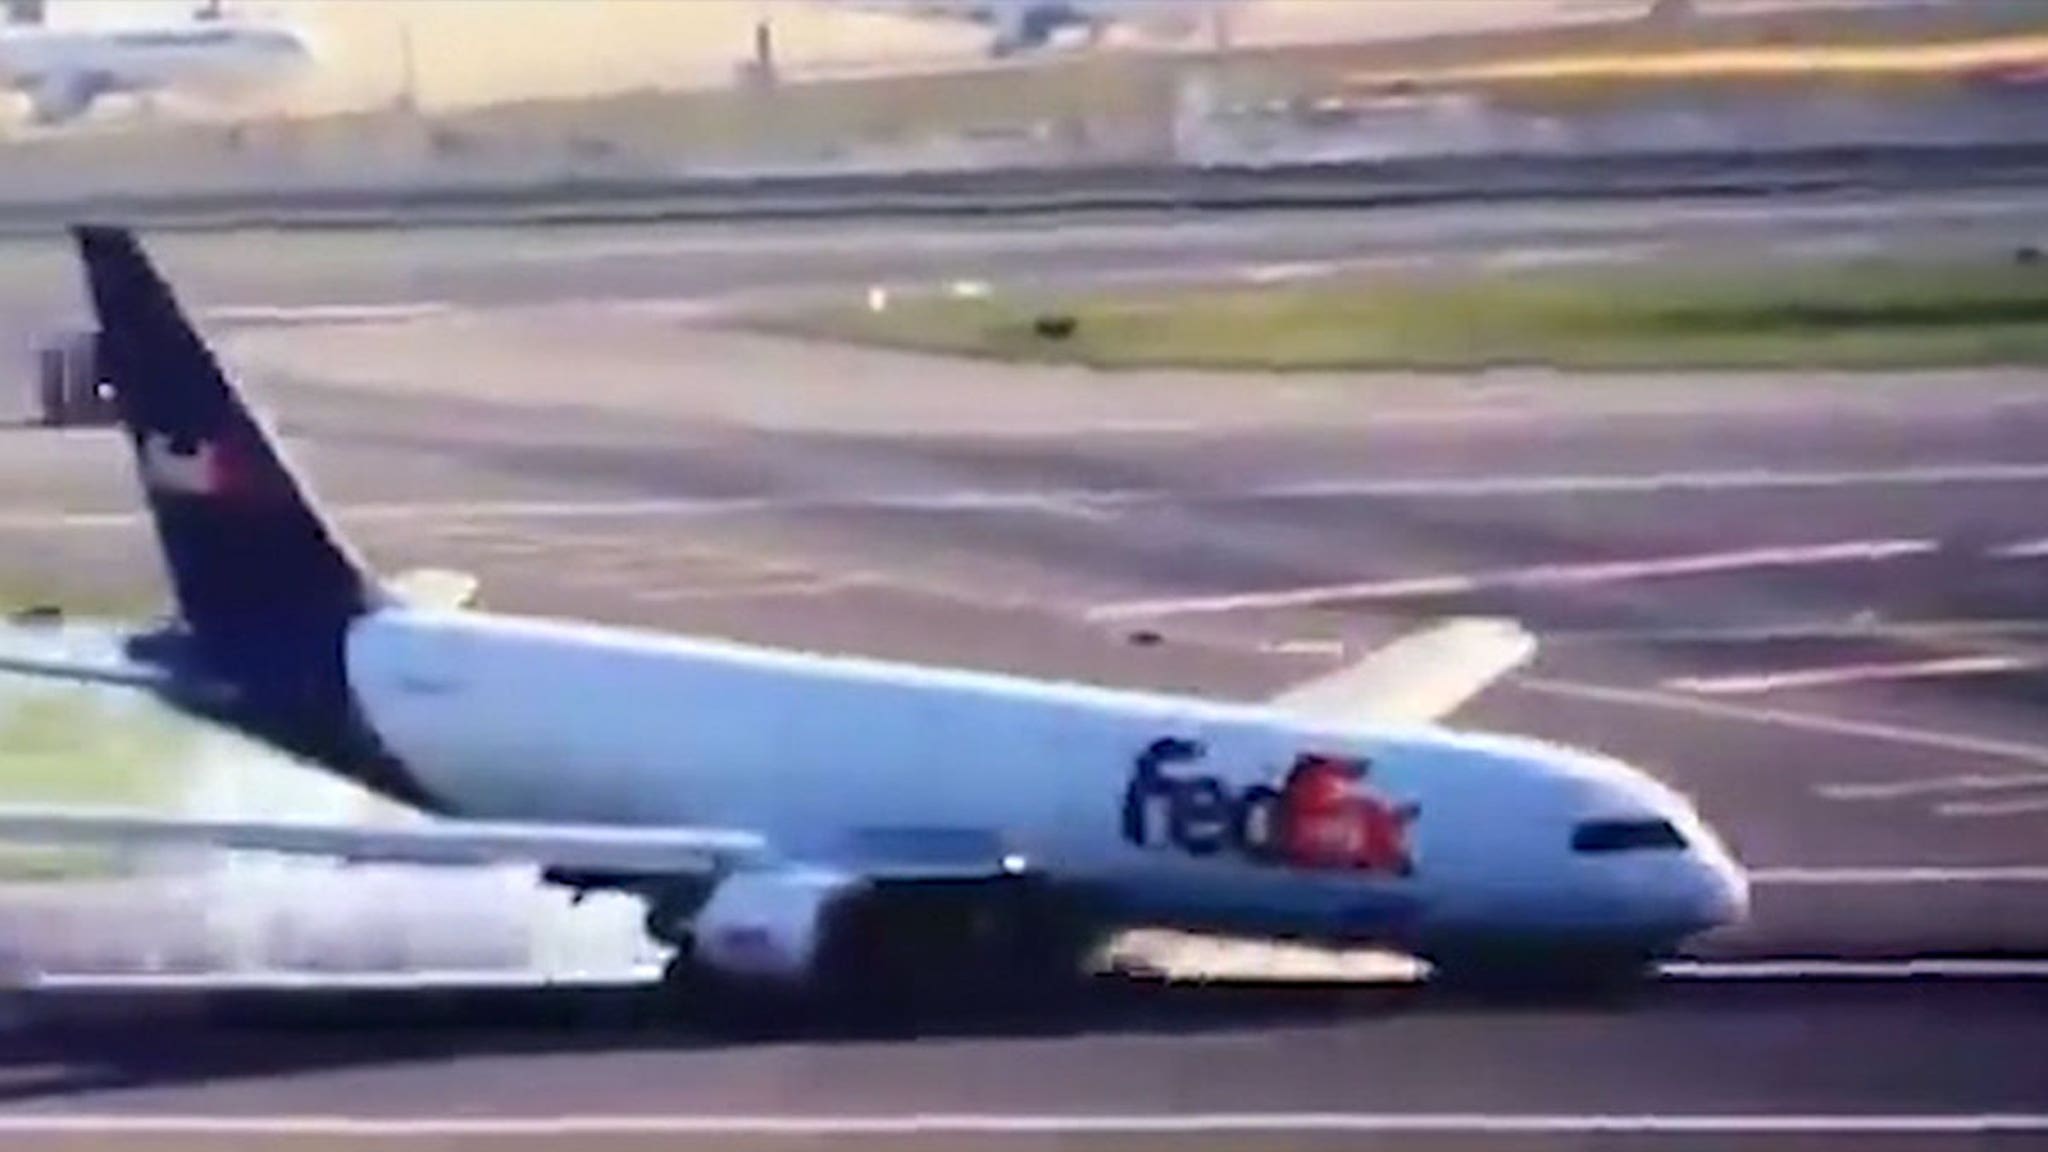 Boeing 767 Plane Crash Lands on Runway, Front Landing Gear Fails